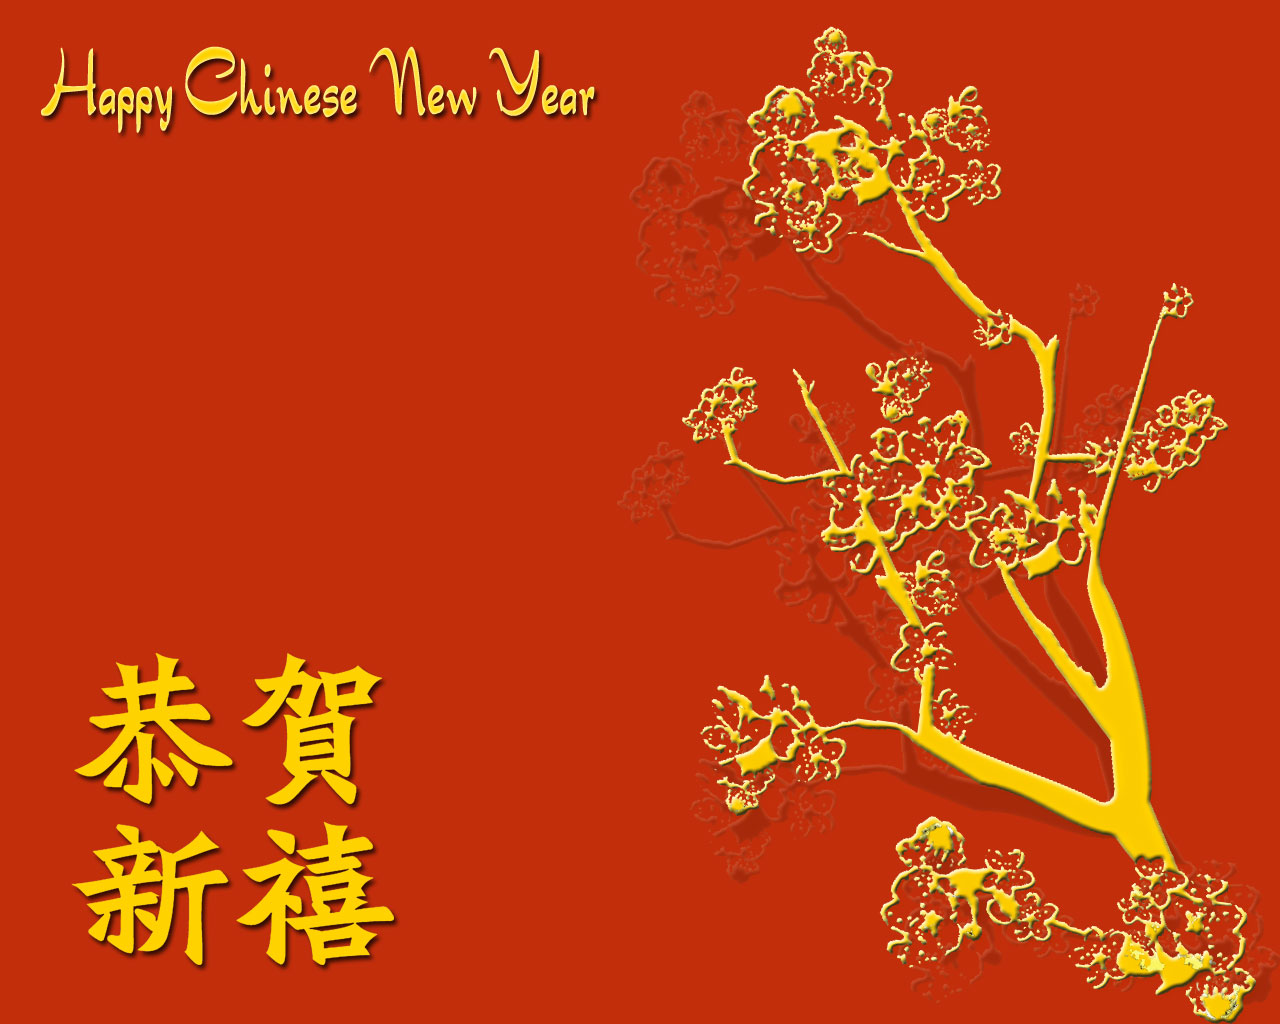 Multi Star: Chinese New Year 2013